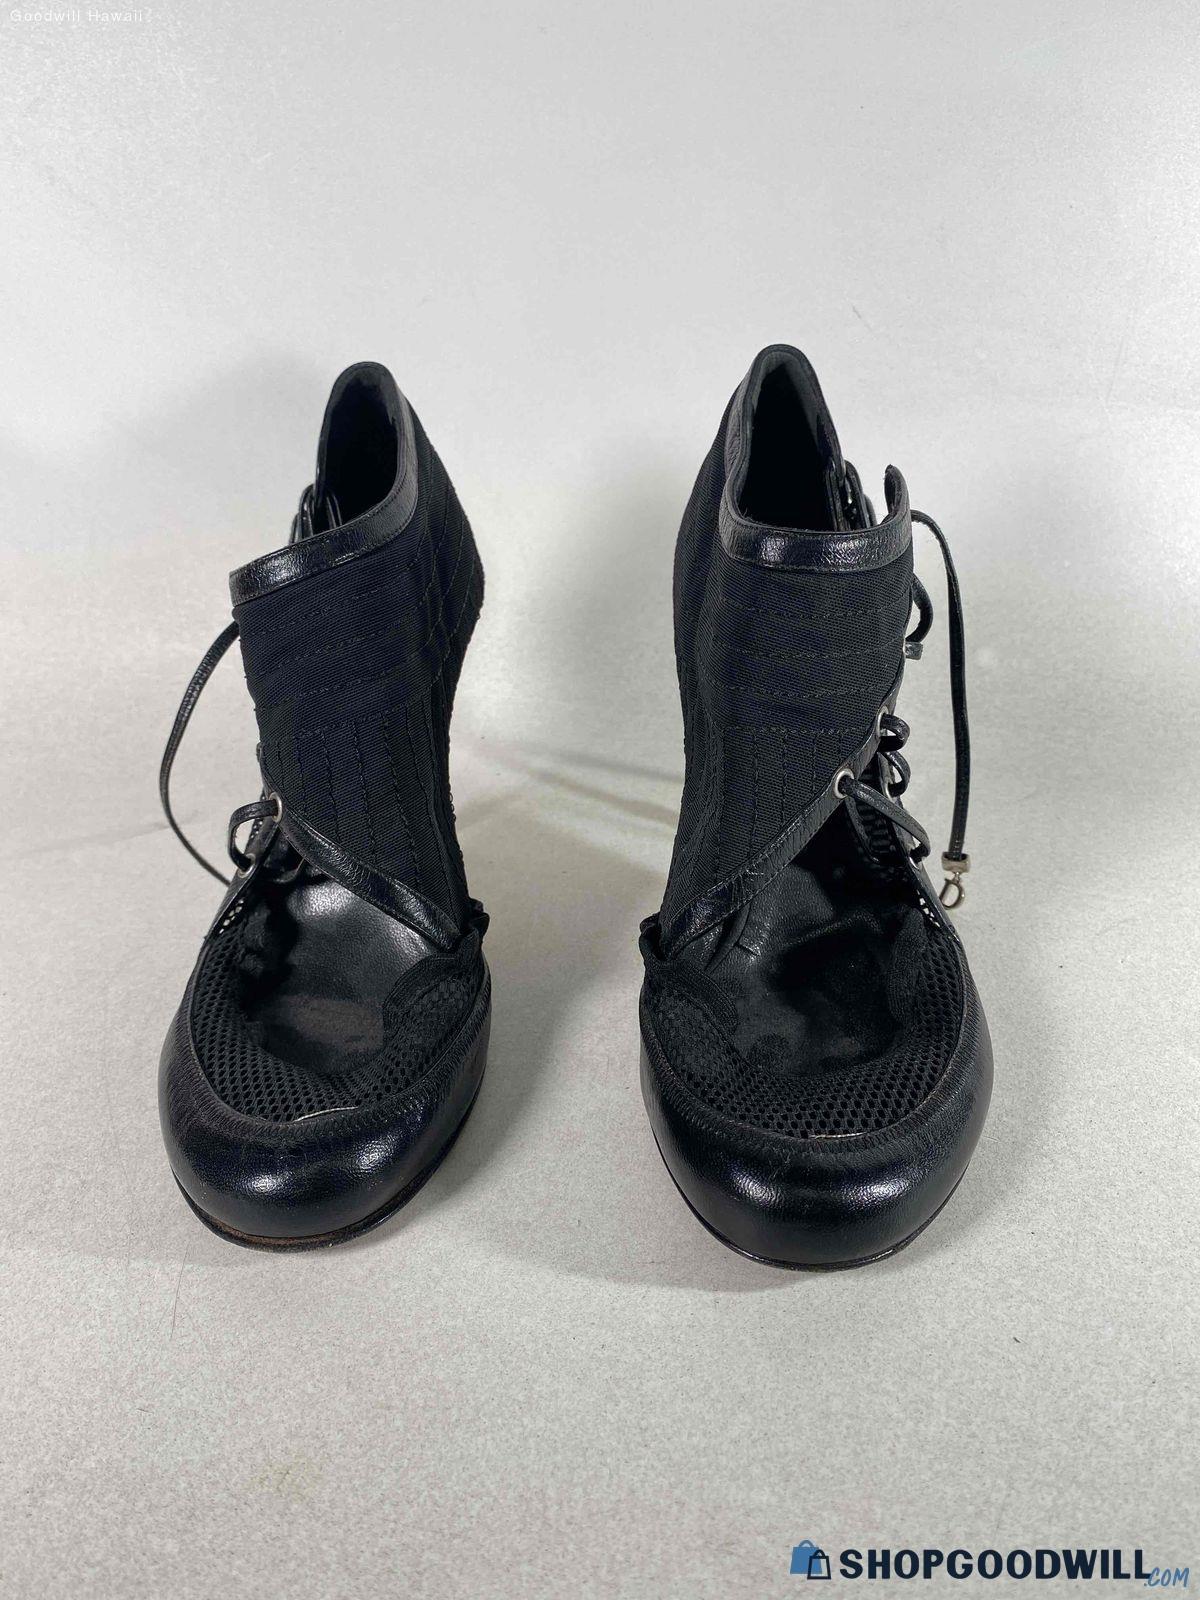 CHRISTIAN DIOR Stiletto Heels - Size 36 - shopgoodwill.com